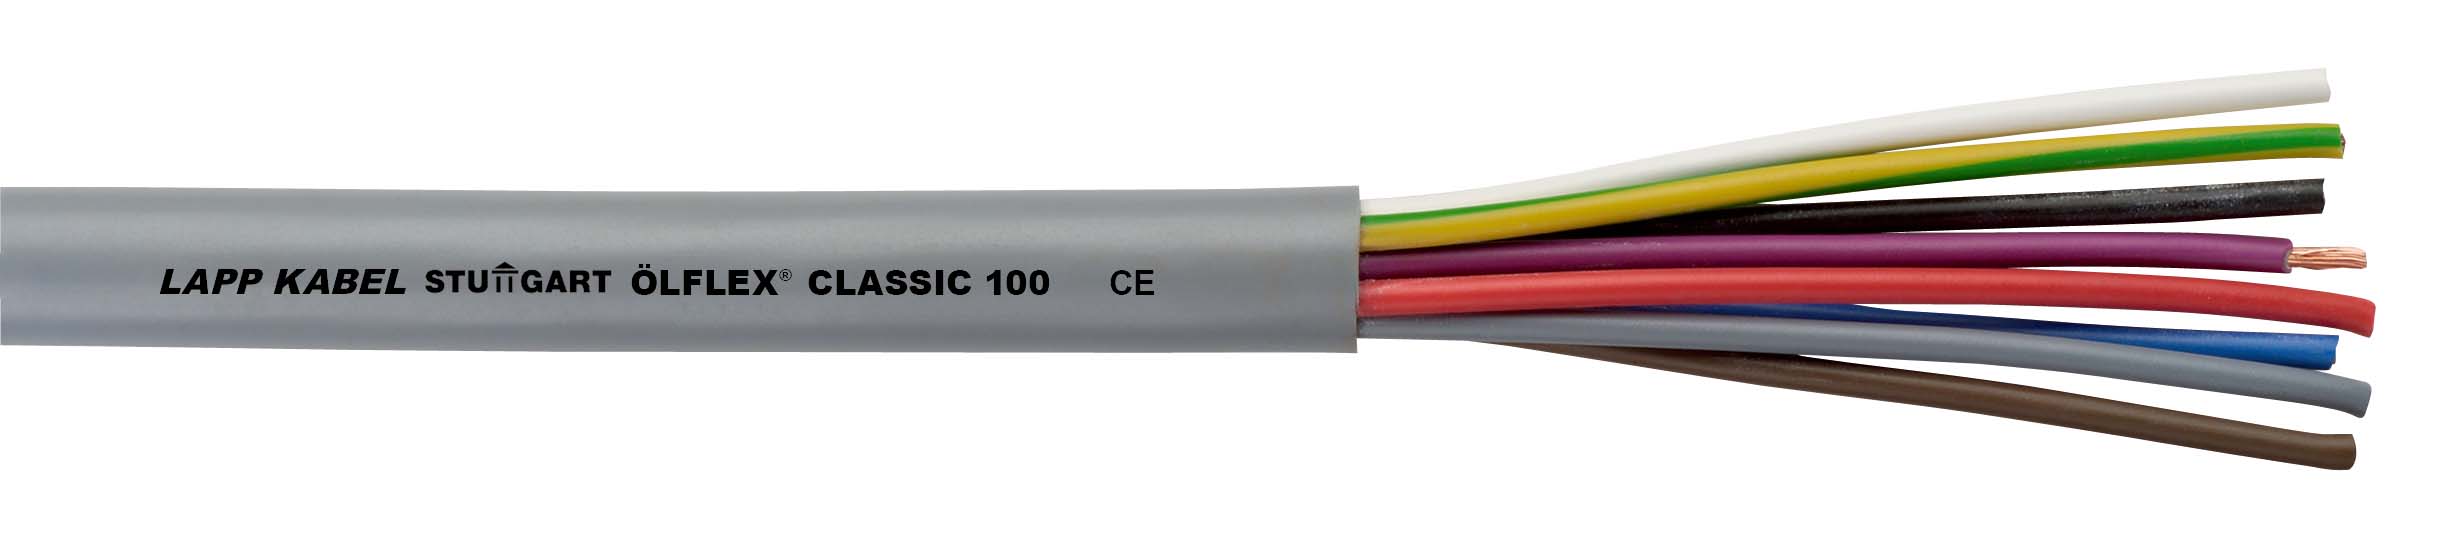 Lapp Kabel&Leitung ÖLFLEX CLASSIC 100 5G2,5 00100893 T500 - 00100893/500